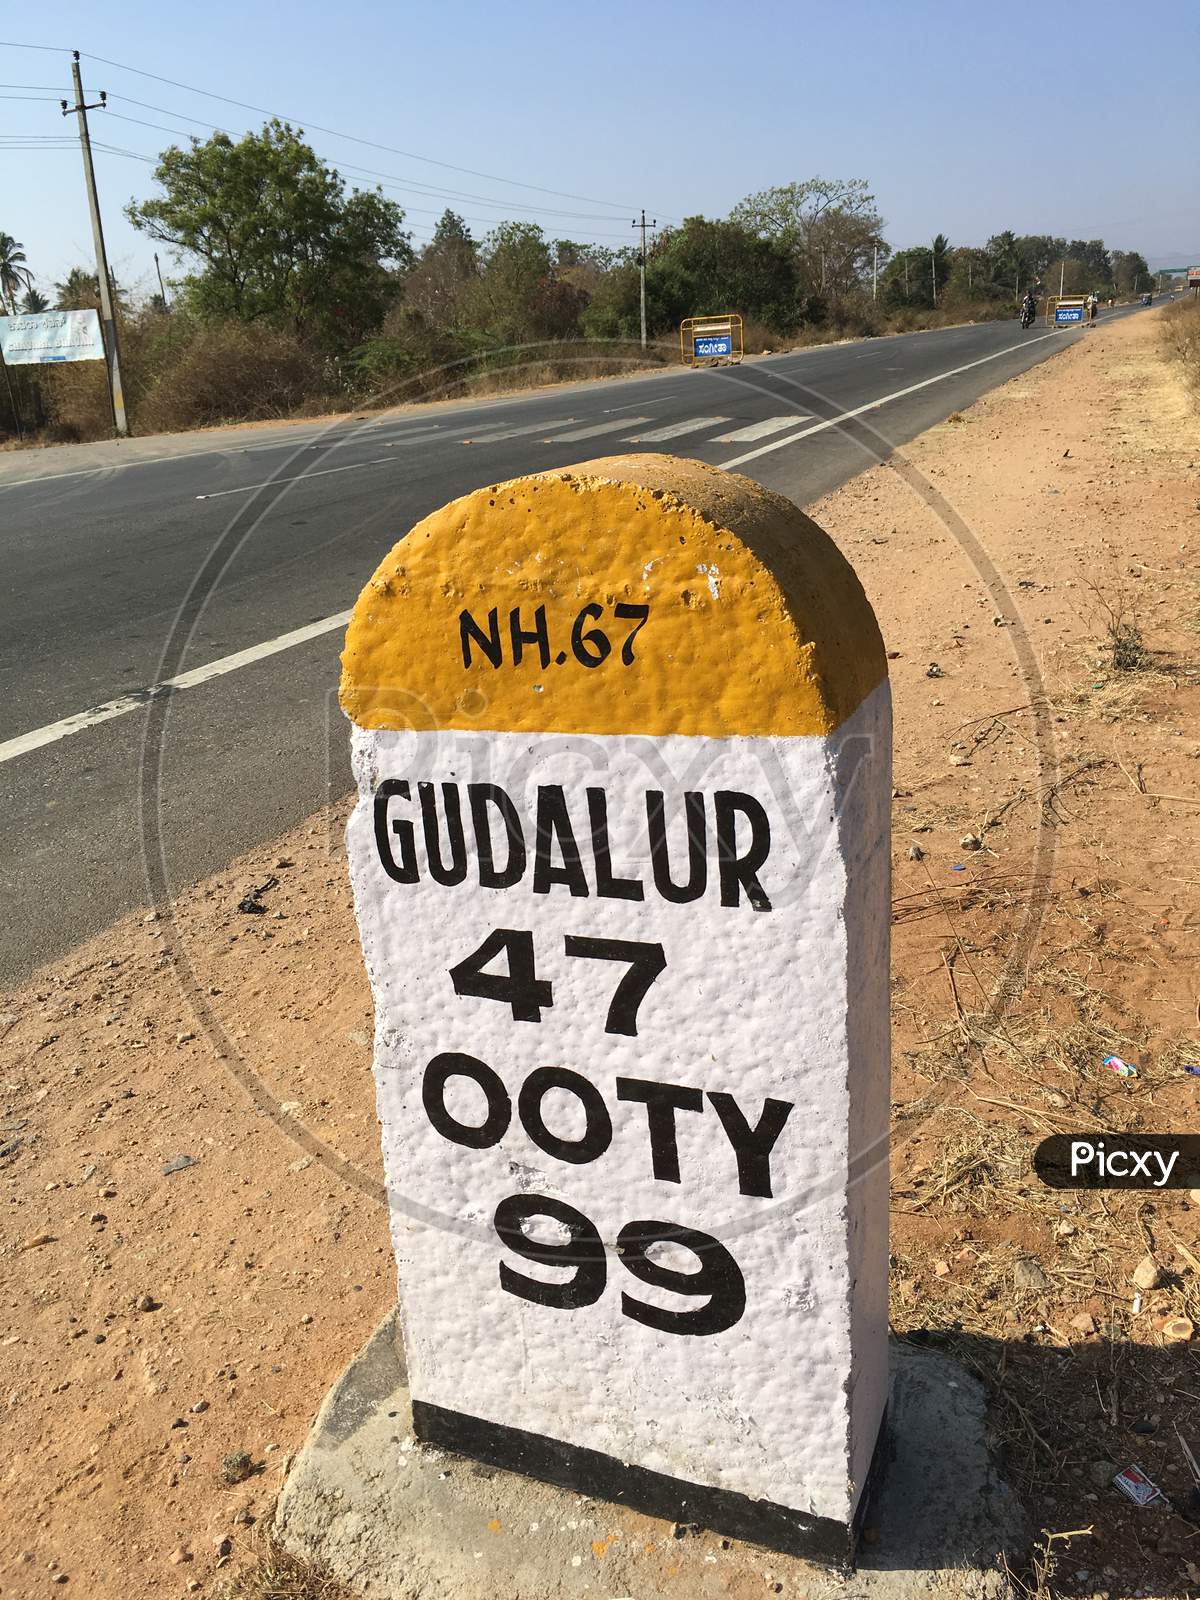 Mile stone 99 kilometers to Ooty, Tamil Nadu